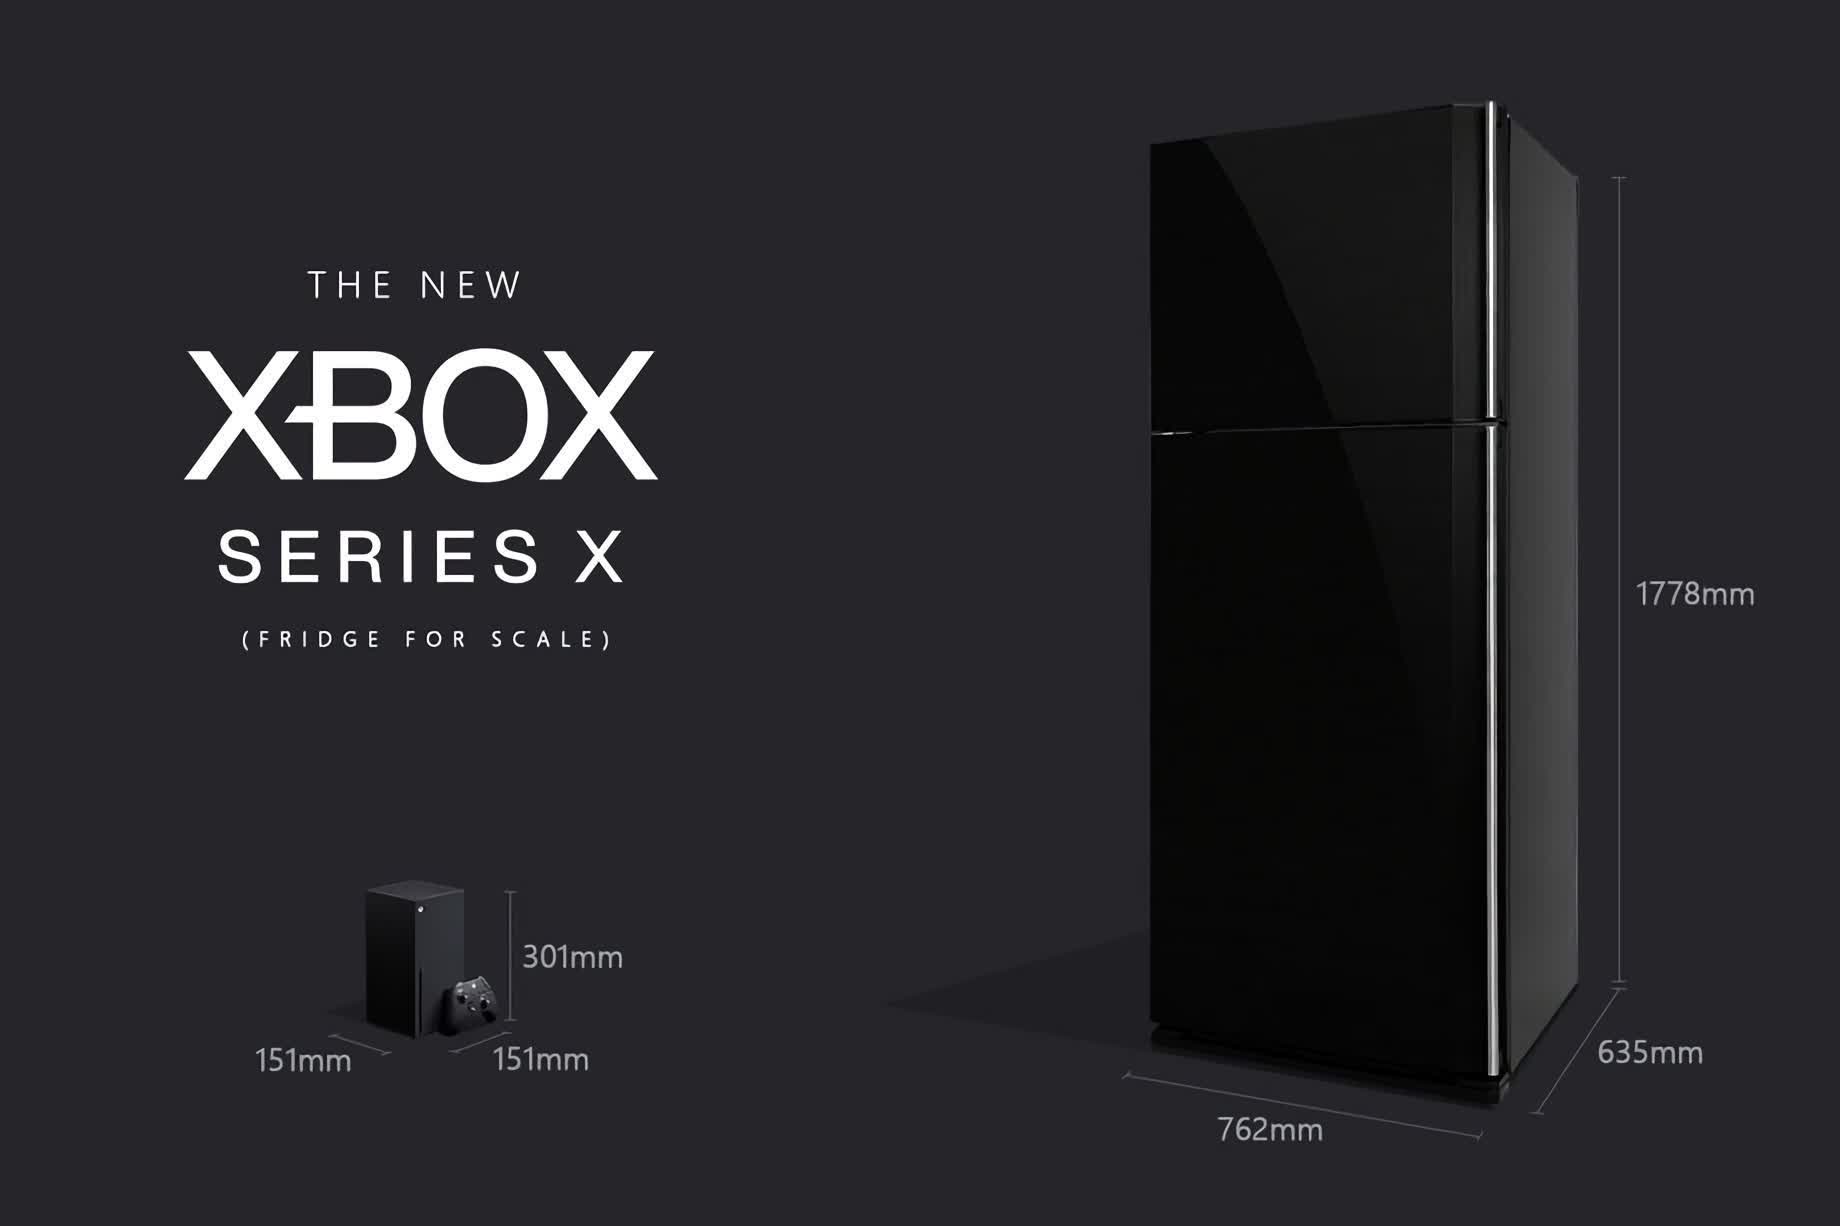 Microsoft gave Snoop Dogg an Xbox Series X refrigerator for his birthday